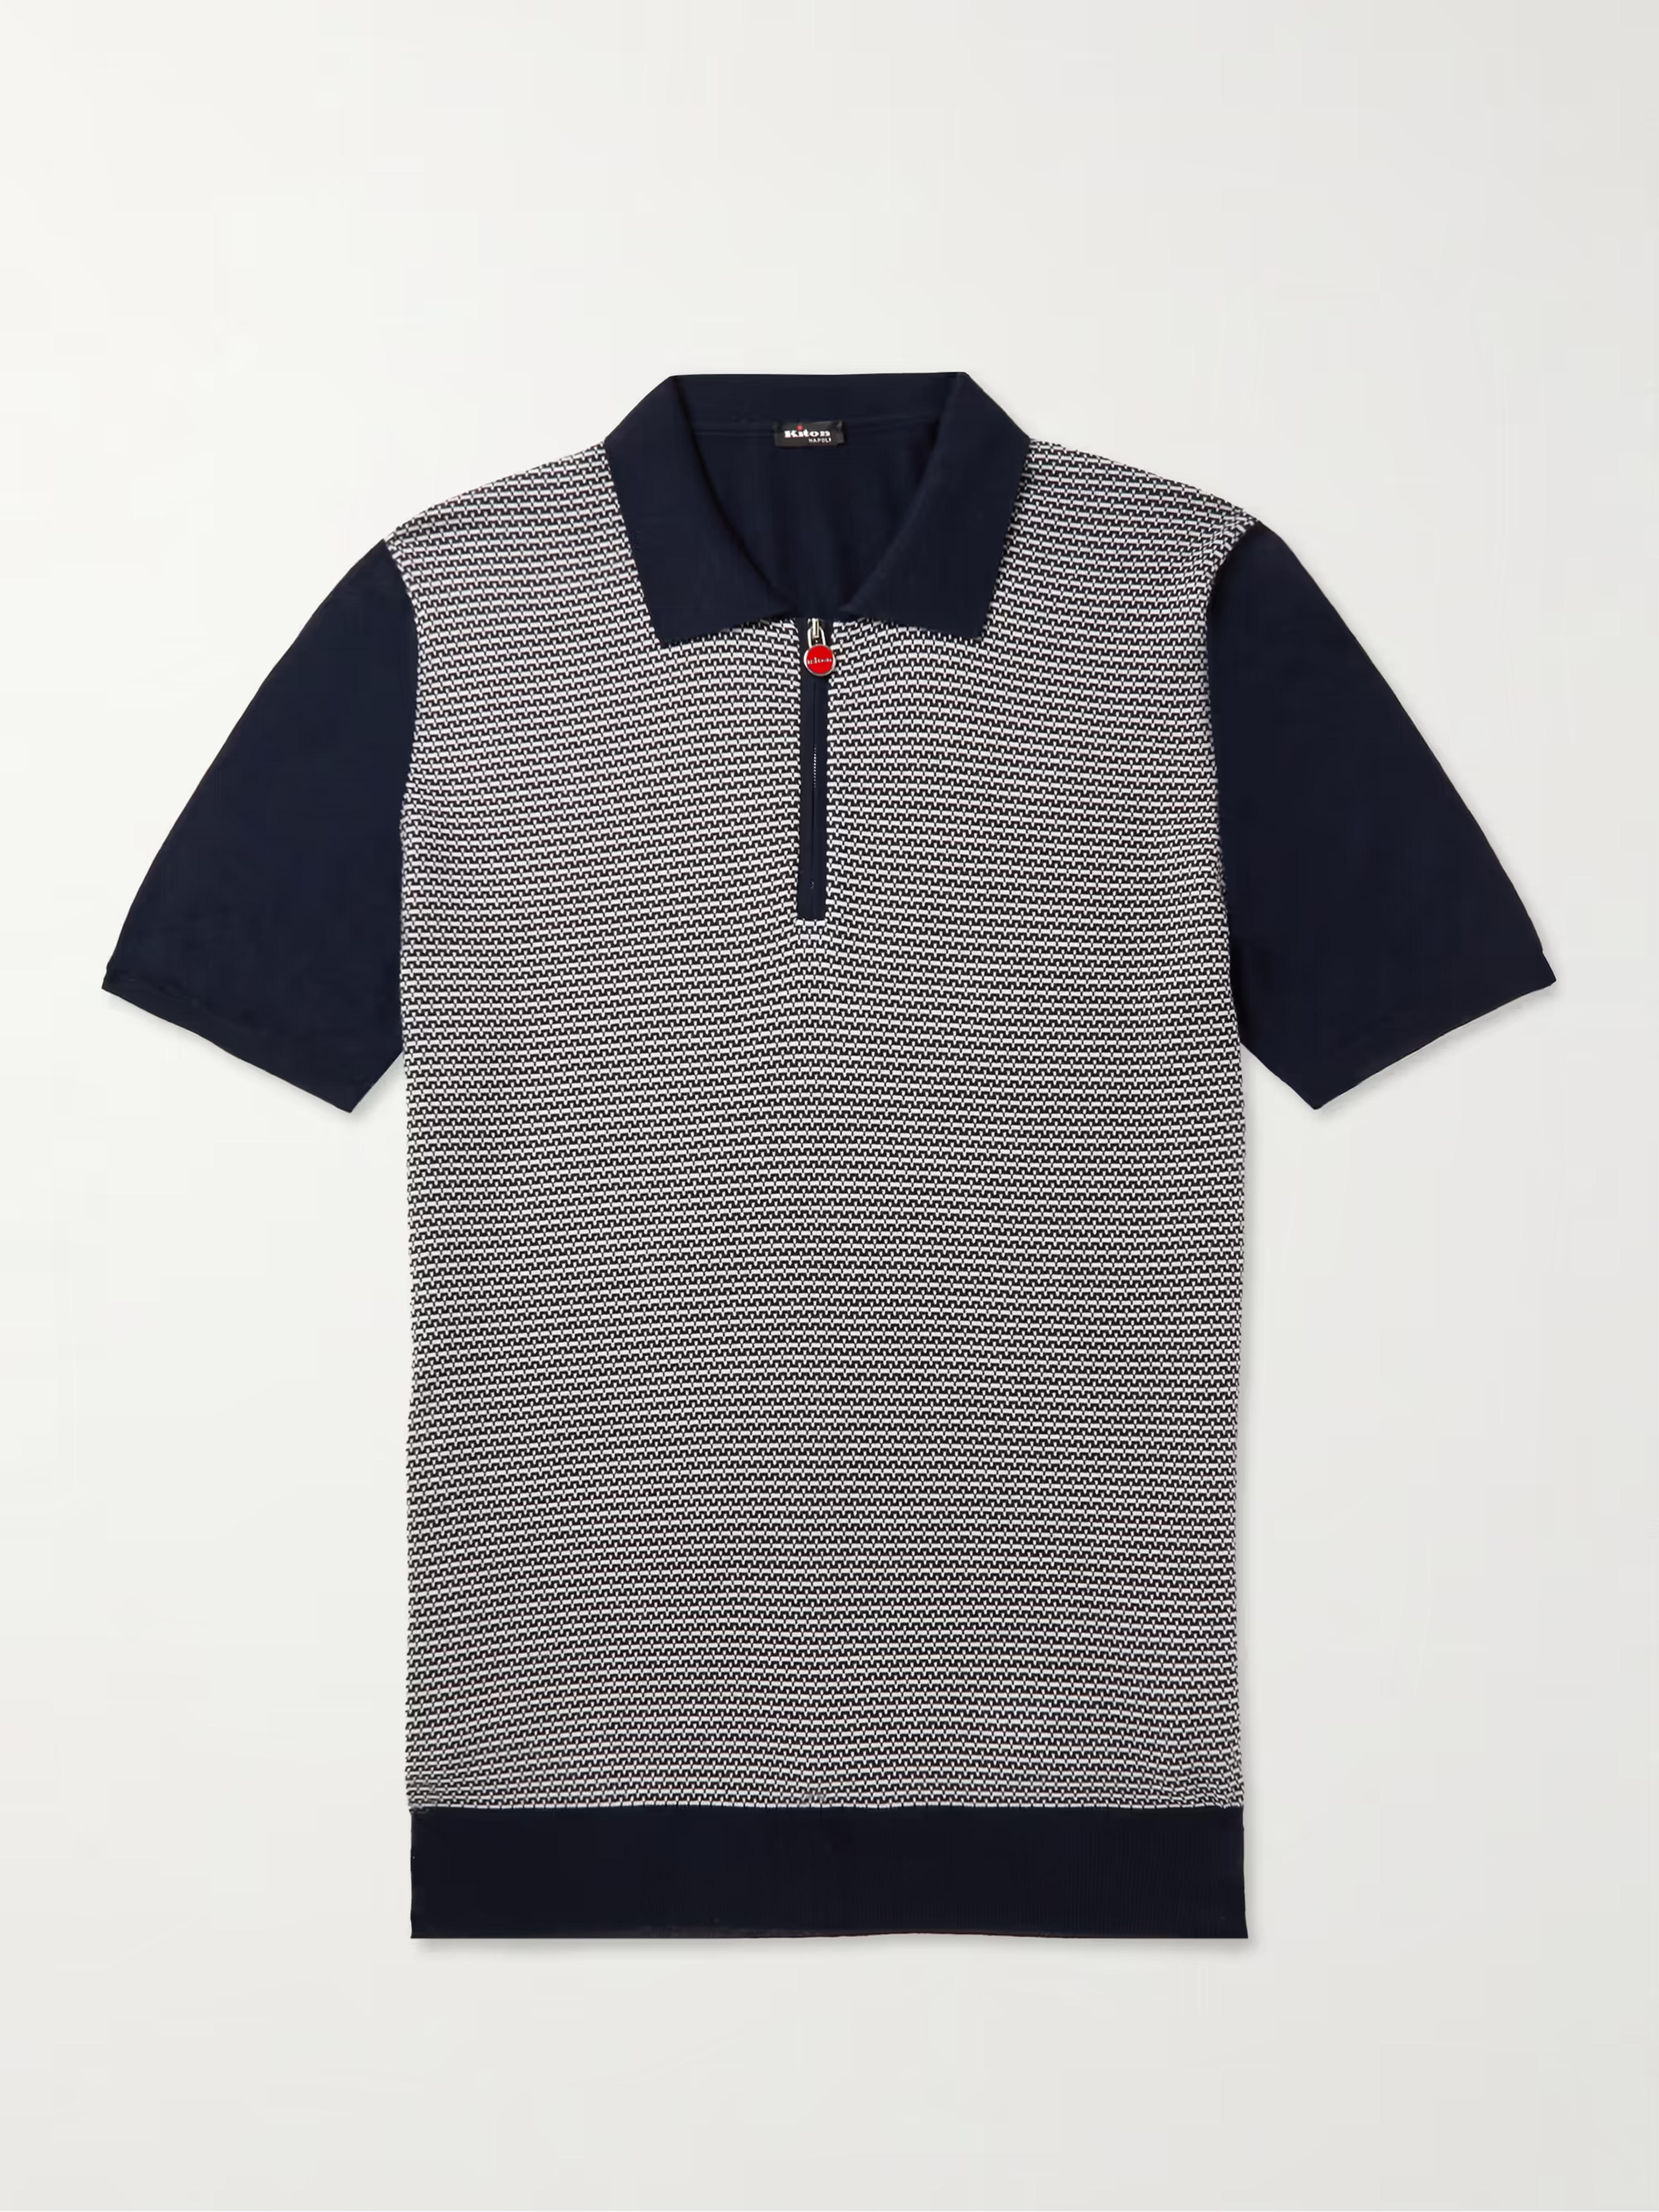 KITON Striped Cotton Half-Zip Polo Shirt | MR PORTER